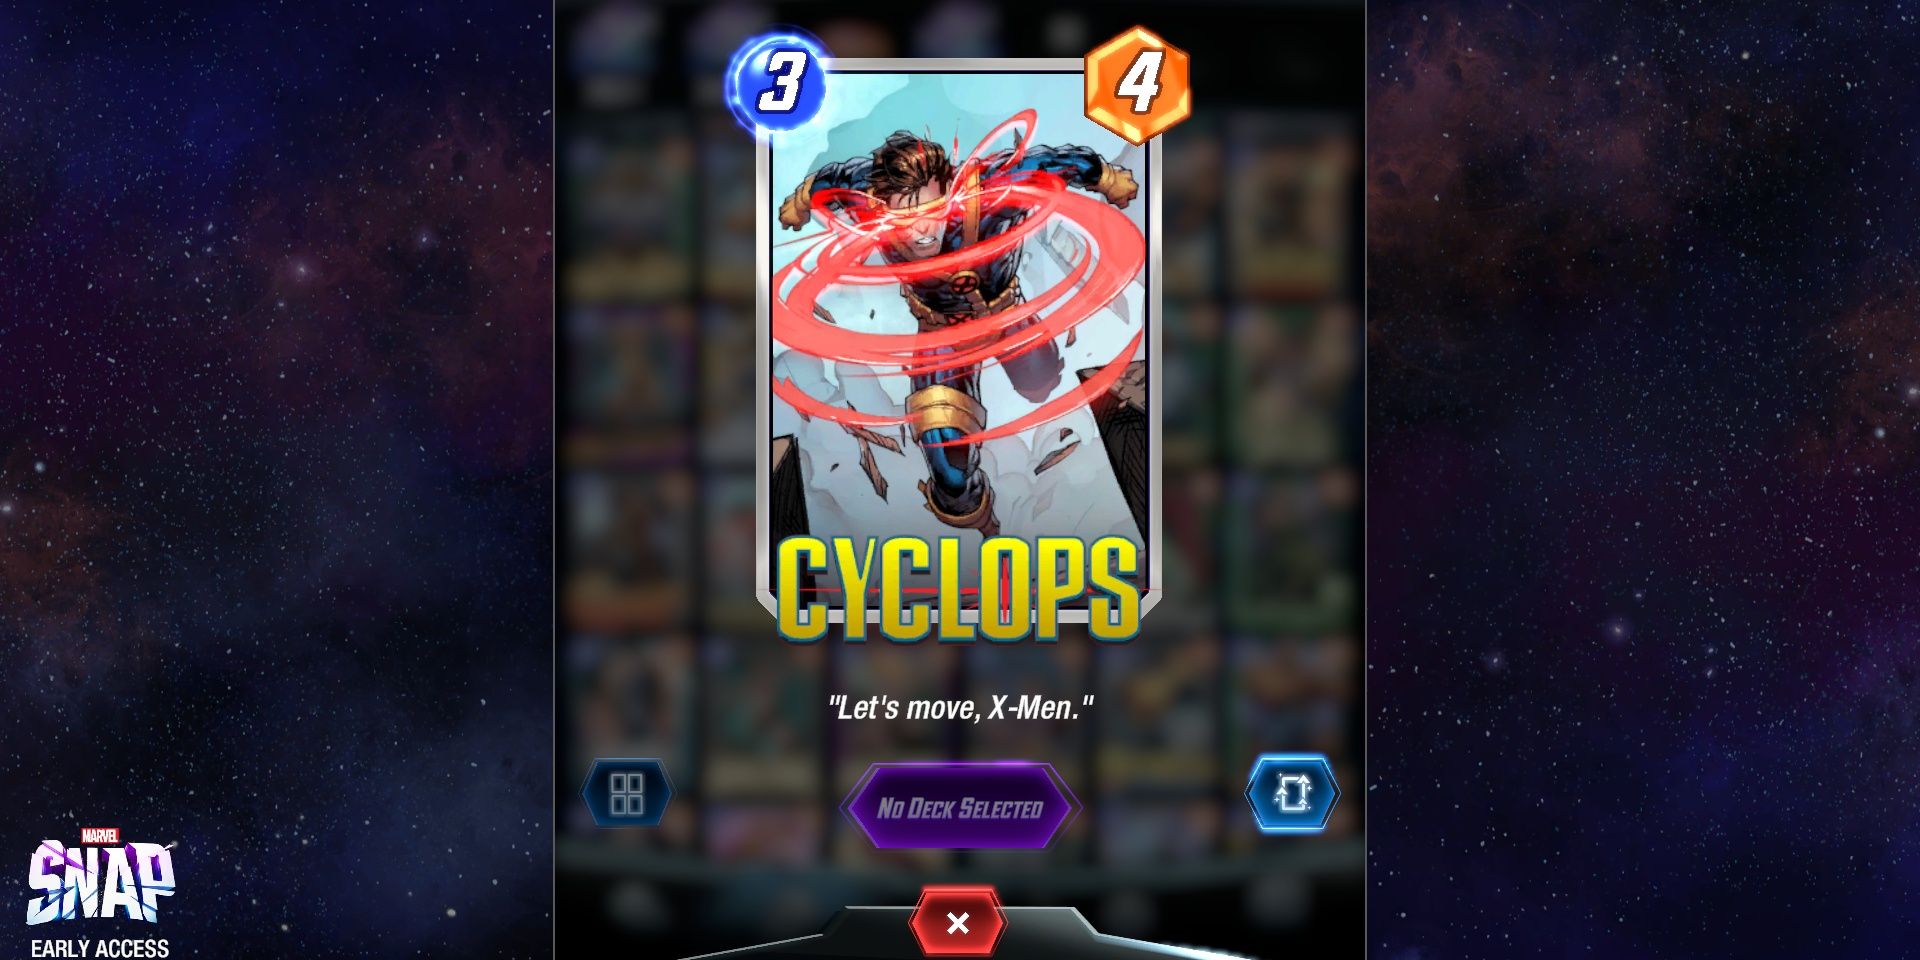 Cyclops' Card in Marvel Snap.